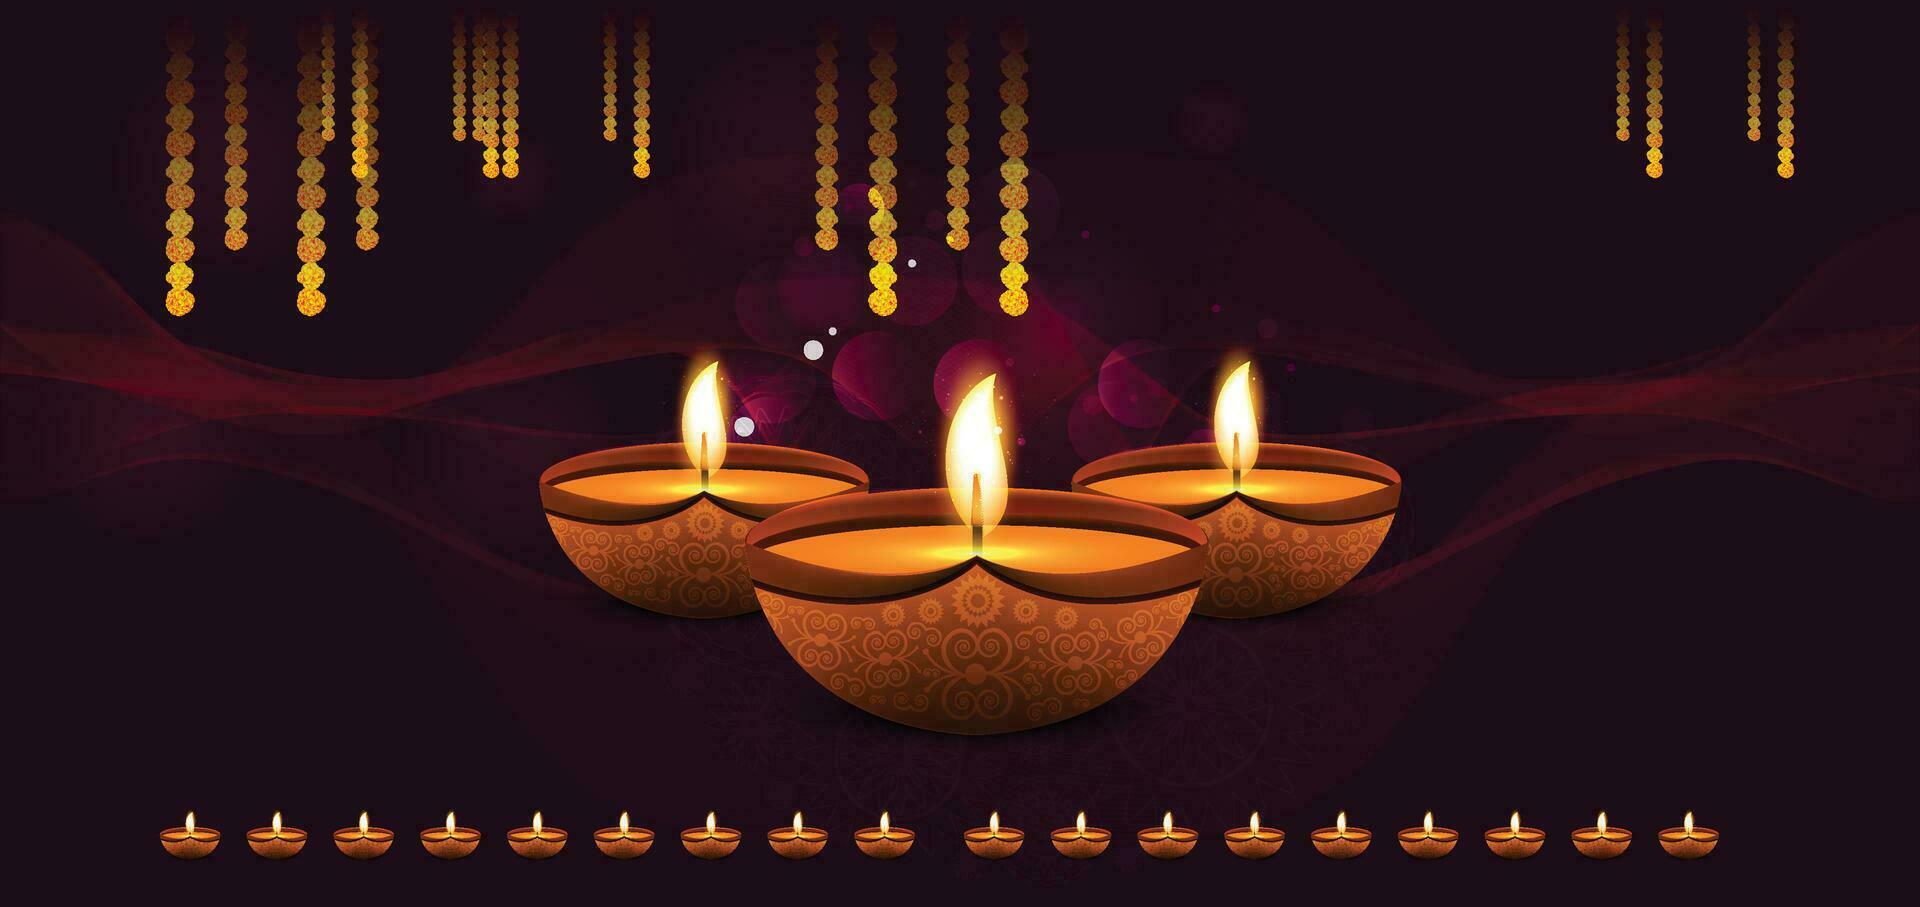 Glowing diwali diya decorative festival web banner vector